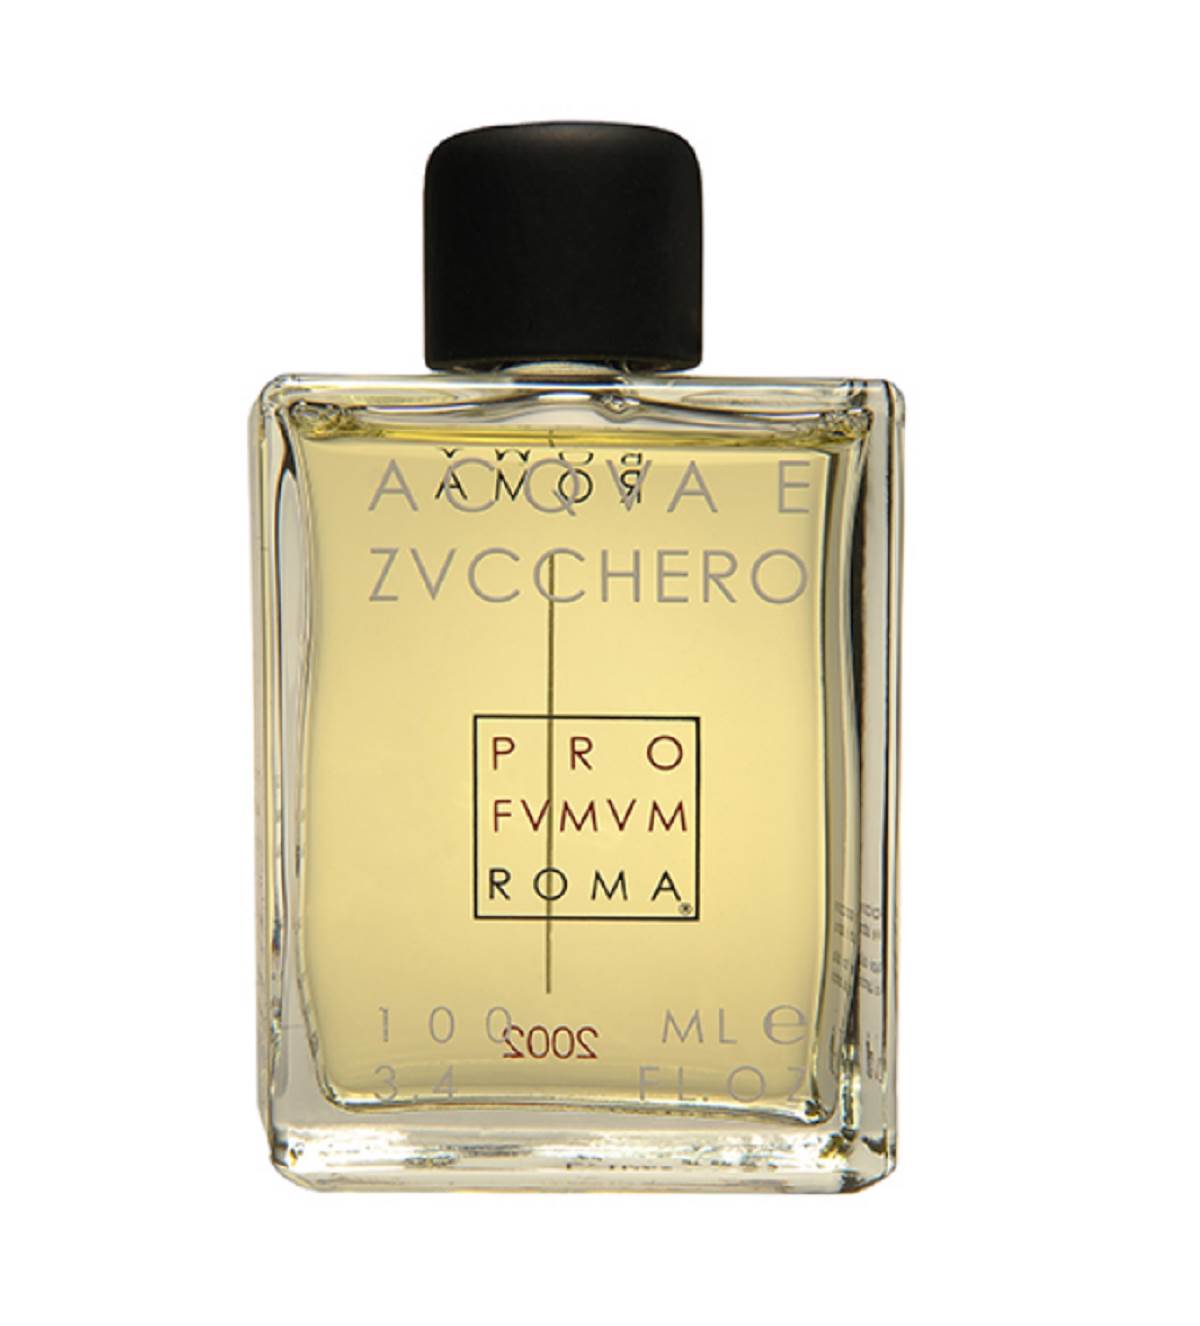  Zorannah  često koristi slatkaste parfeme u kojima preovladava nota vanile Acqva e Zucchero. 